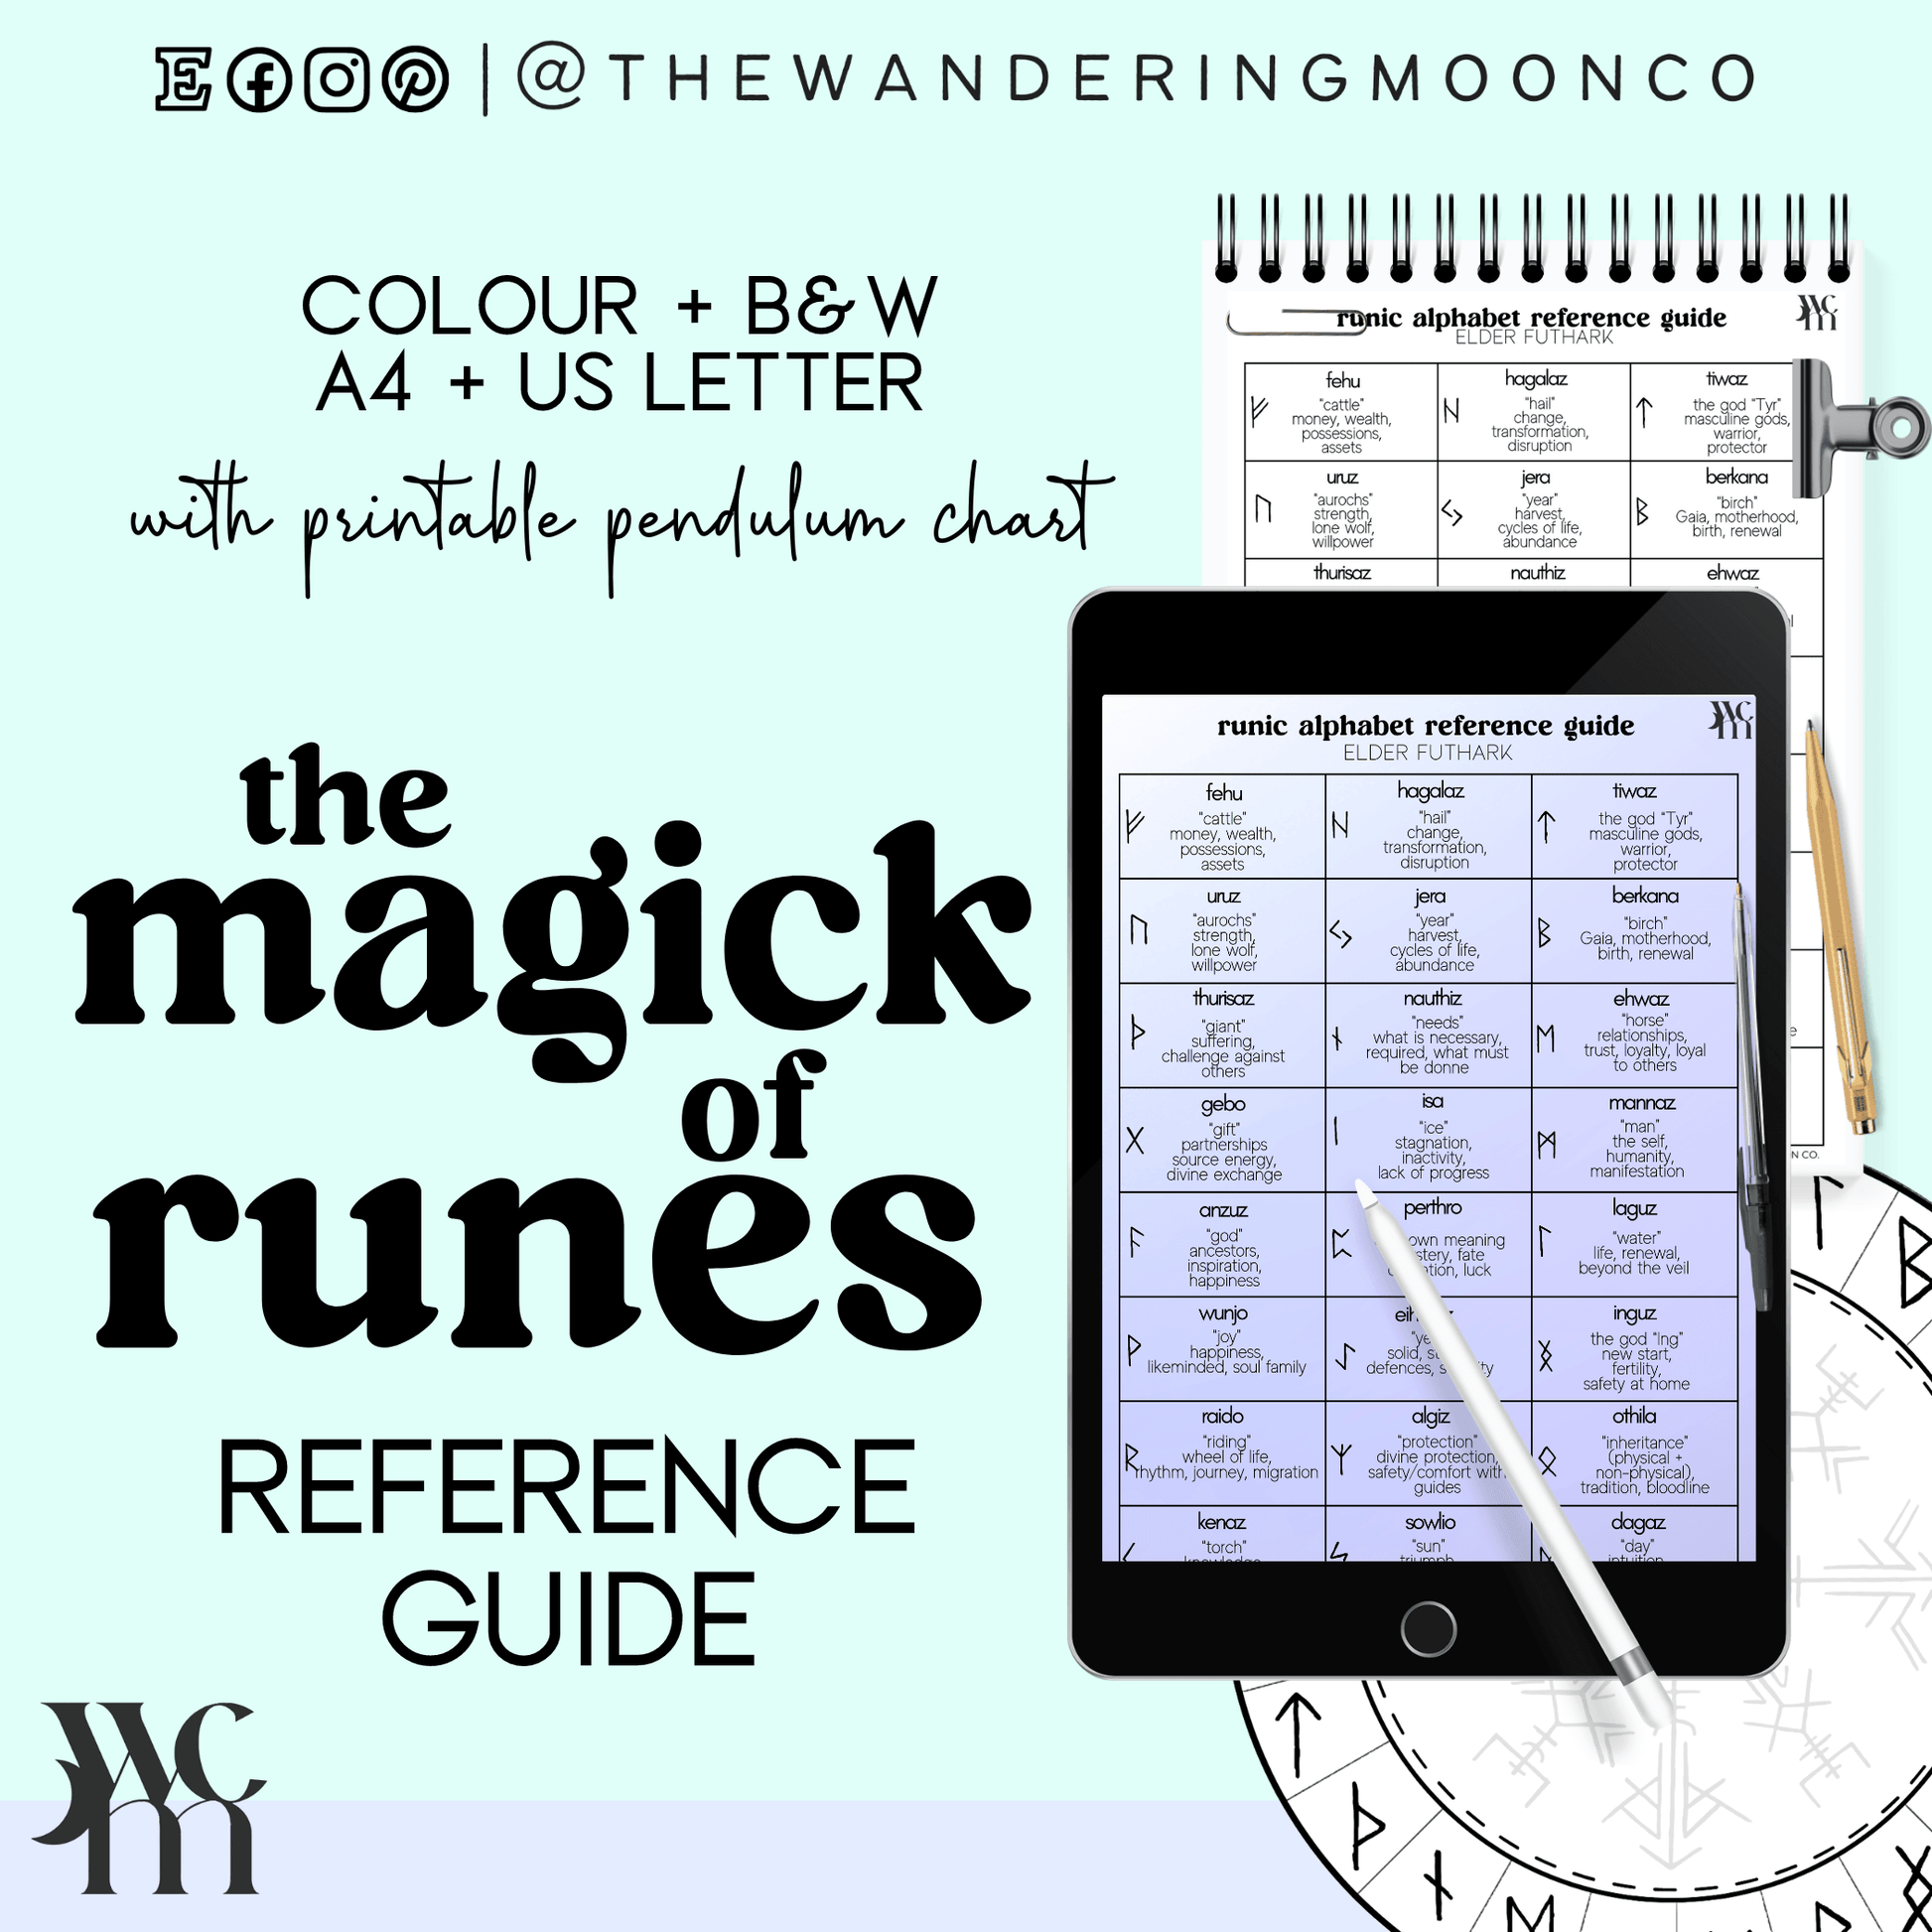 elder futhark runes guide, cheat sheet | reference guide: viking runes | nordic runes and symbols | rune casting